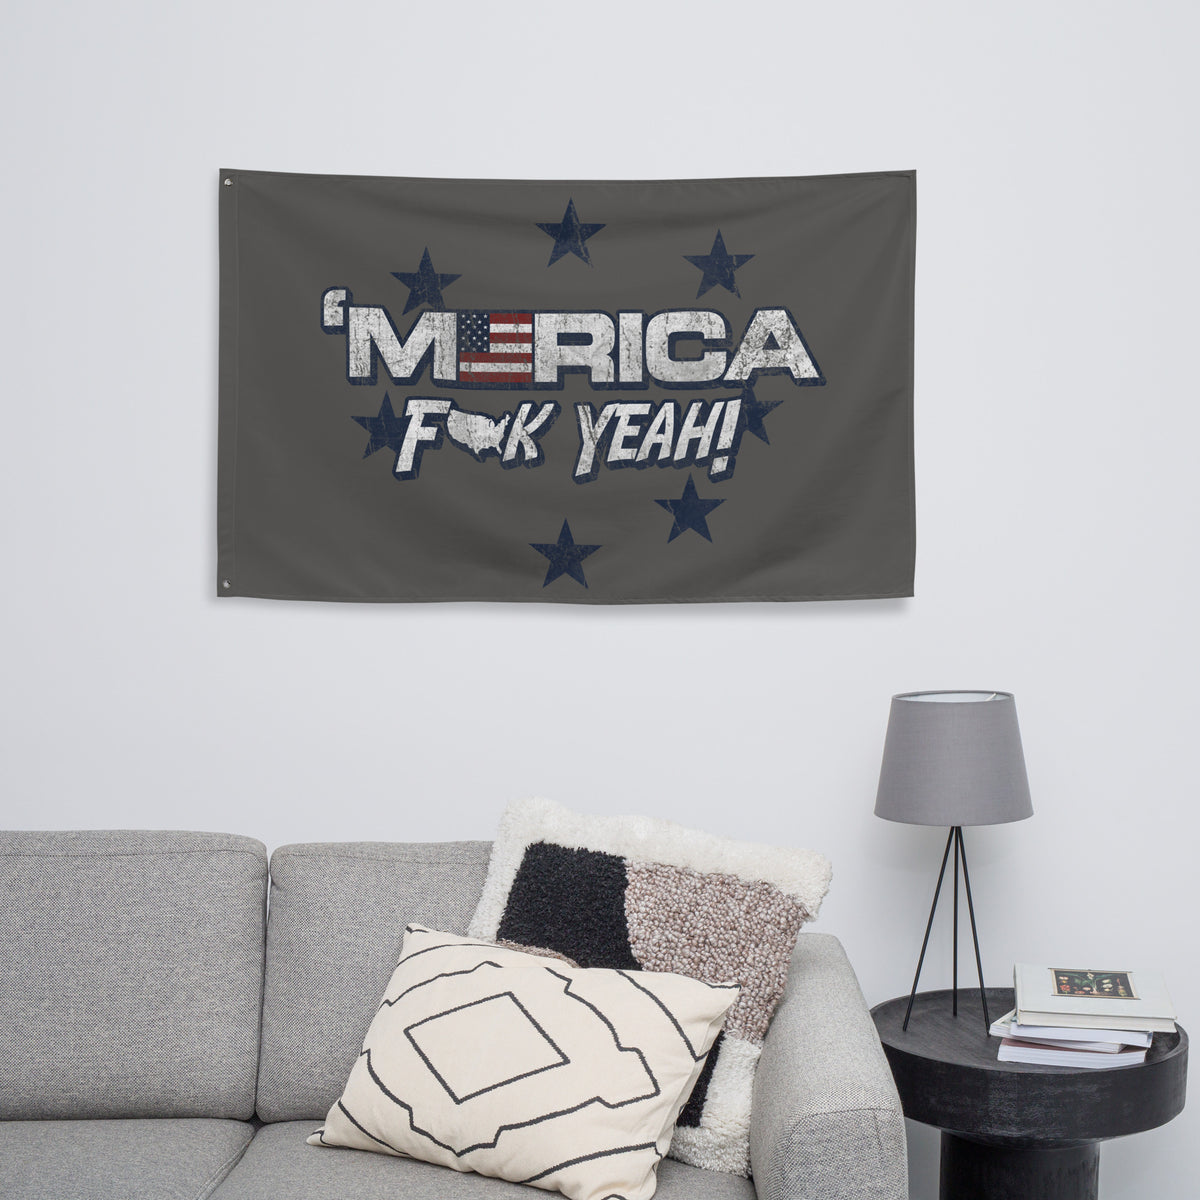 Merica Wall Flag